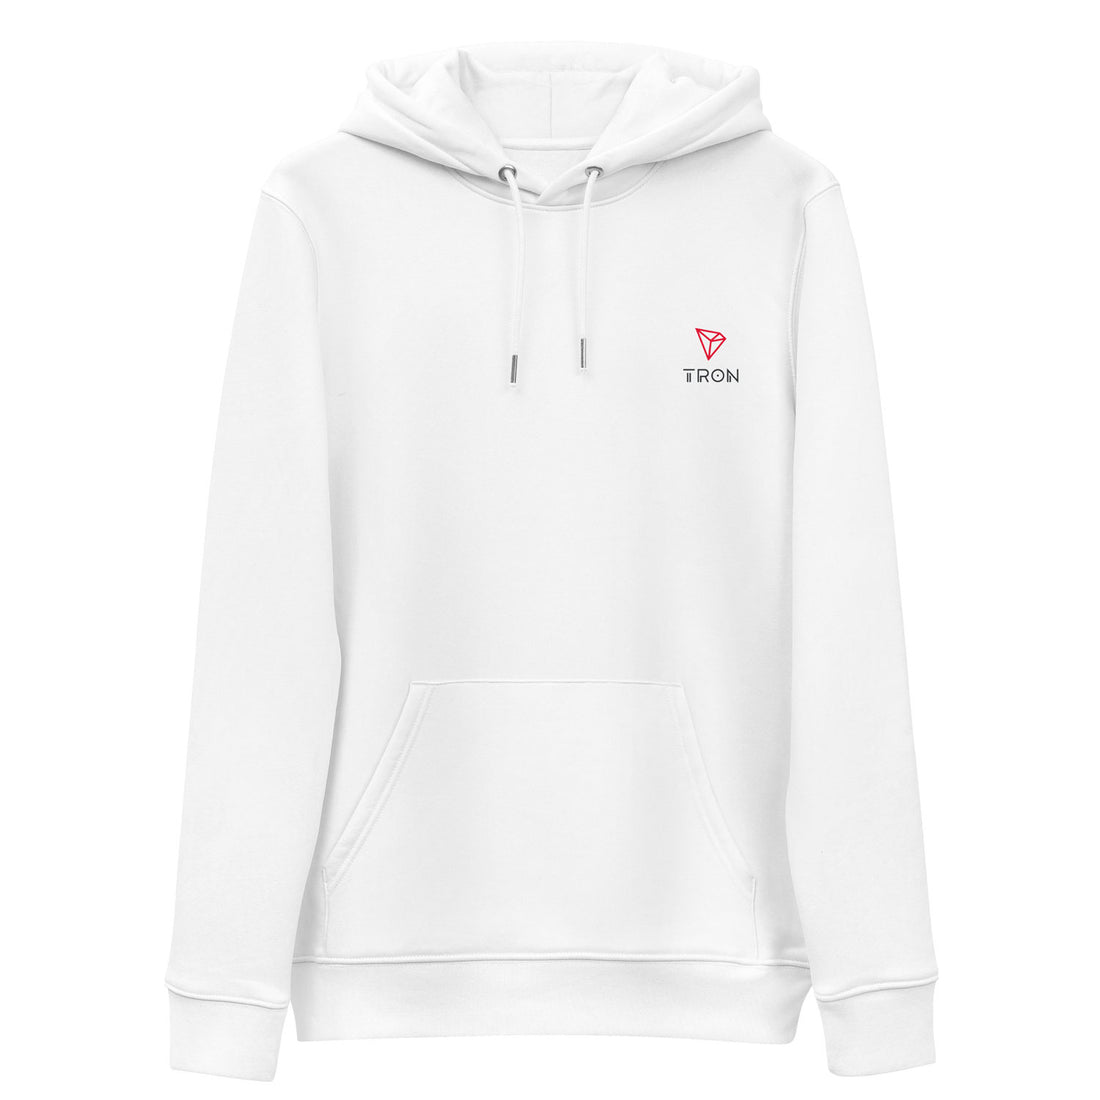 tron trx logo hoodie white 